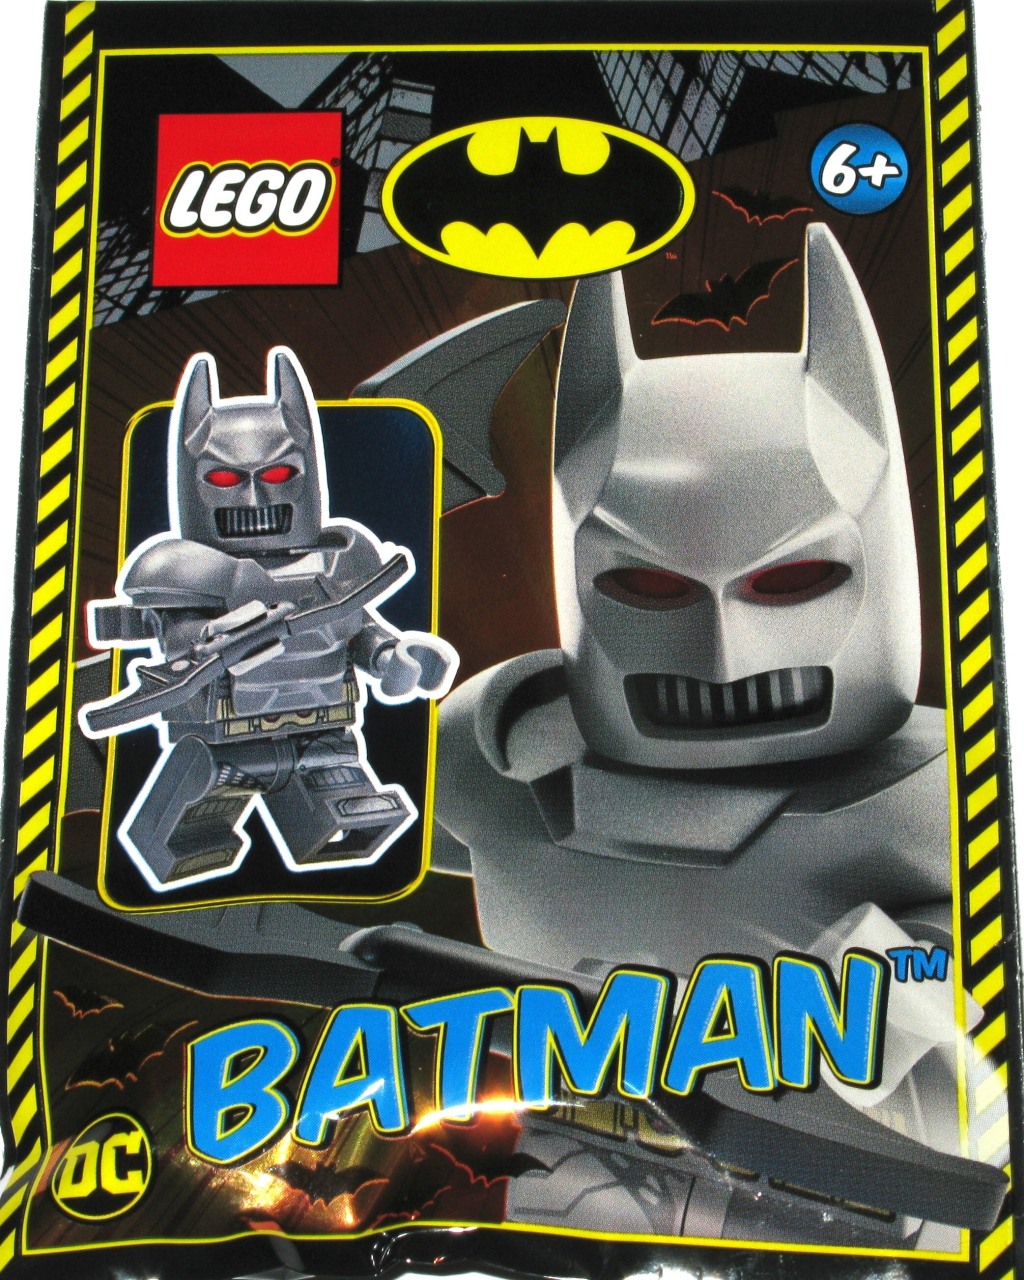 LEGO-DC-Batman-Bat-family-LEO-characters-6-1 – Blocks – the monthly LEGO  magazine for fans